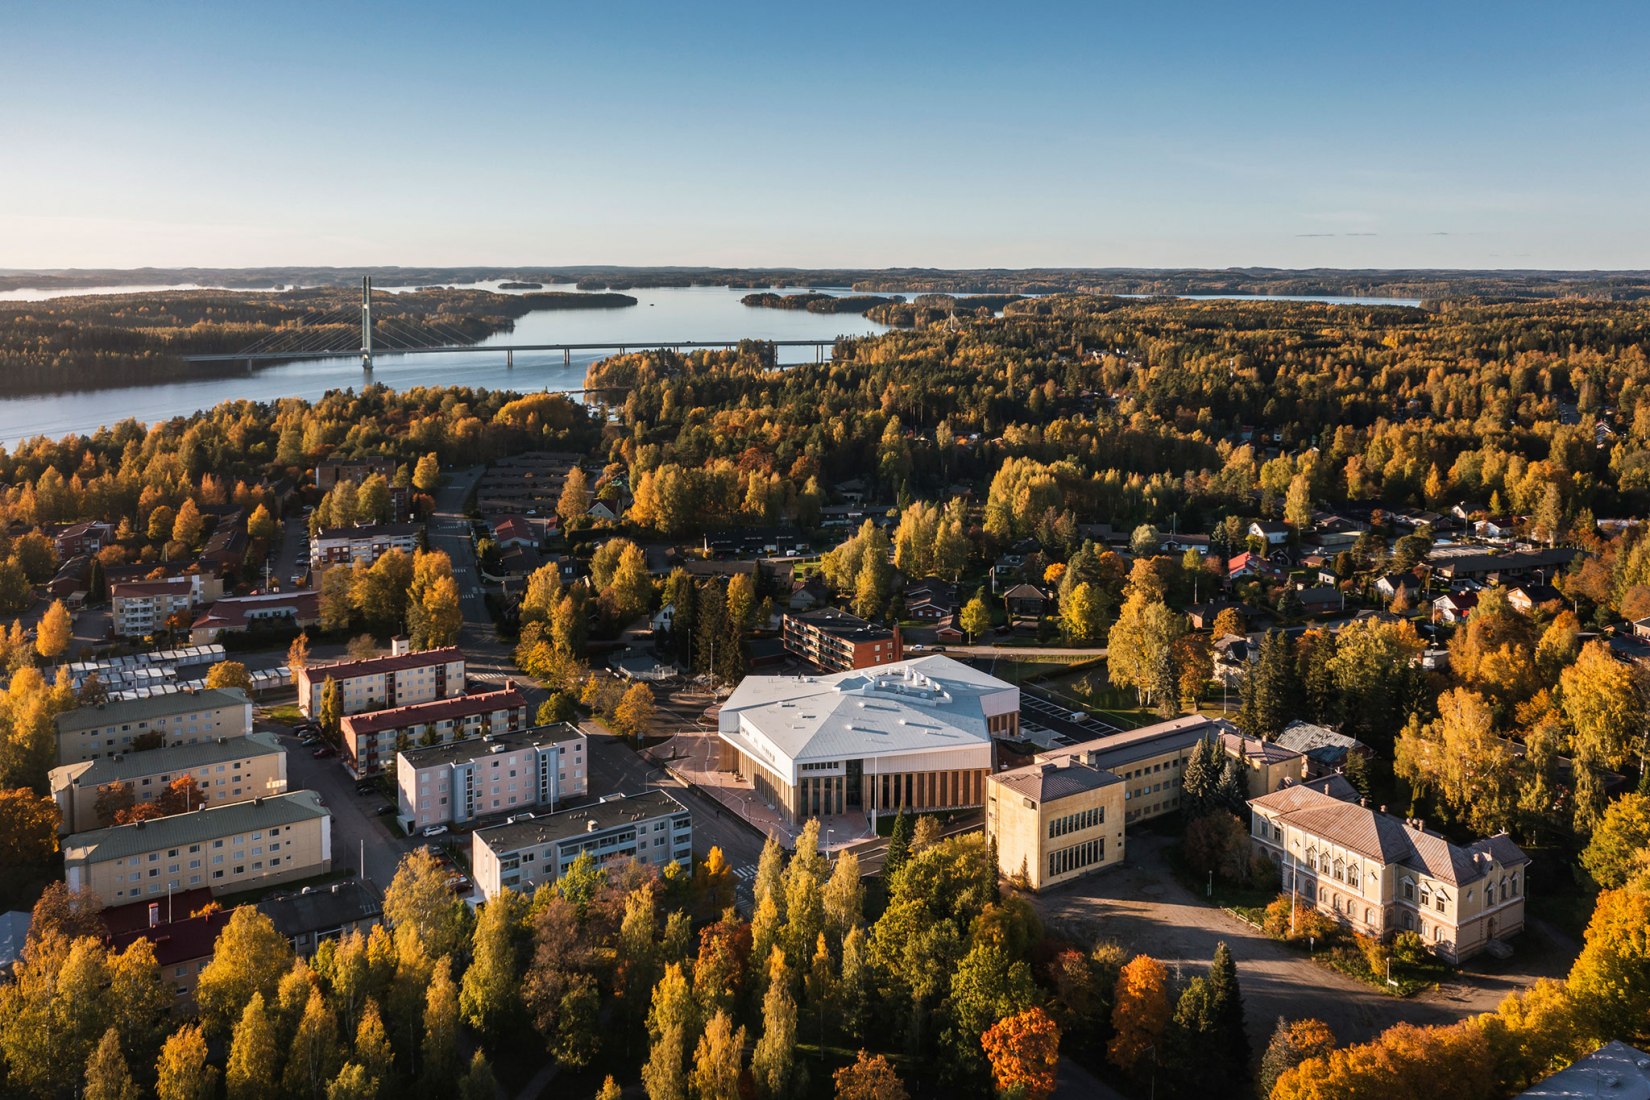 Heinola Upper Secondary School by Lahdelma & Mahlamäki architects. Photography by Kuvatoimisto Kuvio.